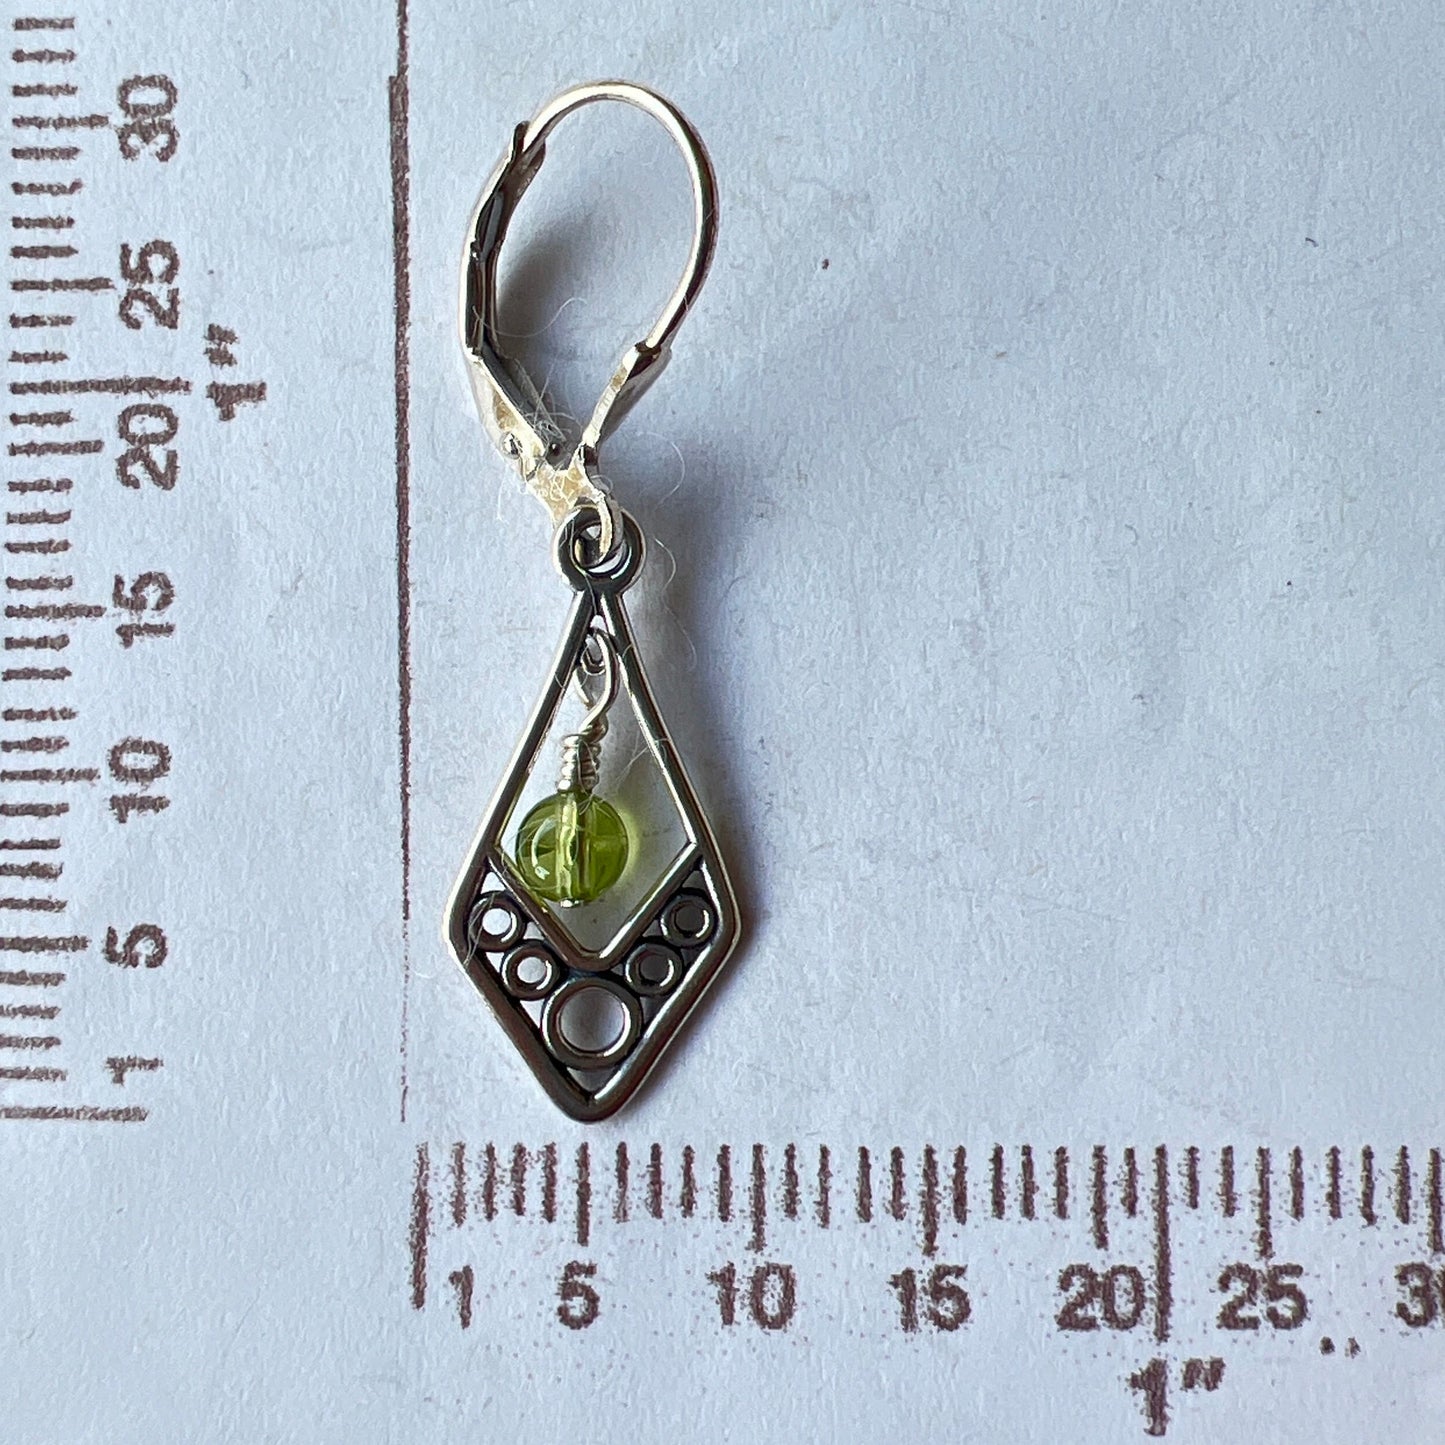 Sterrling Silver Filigree with gemstone dangled earings